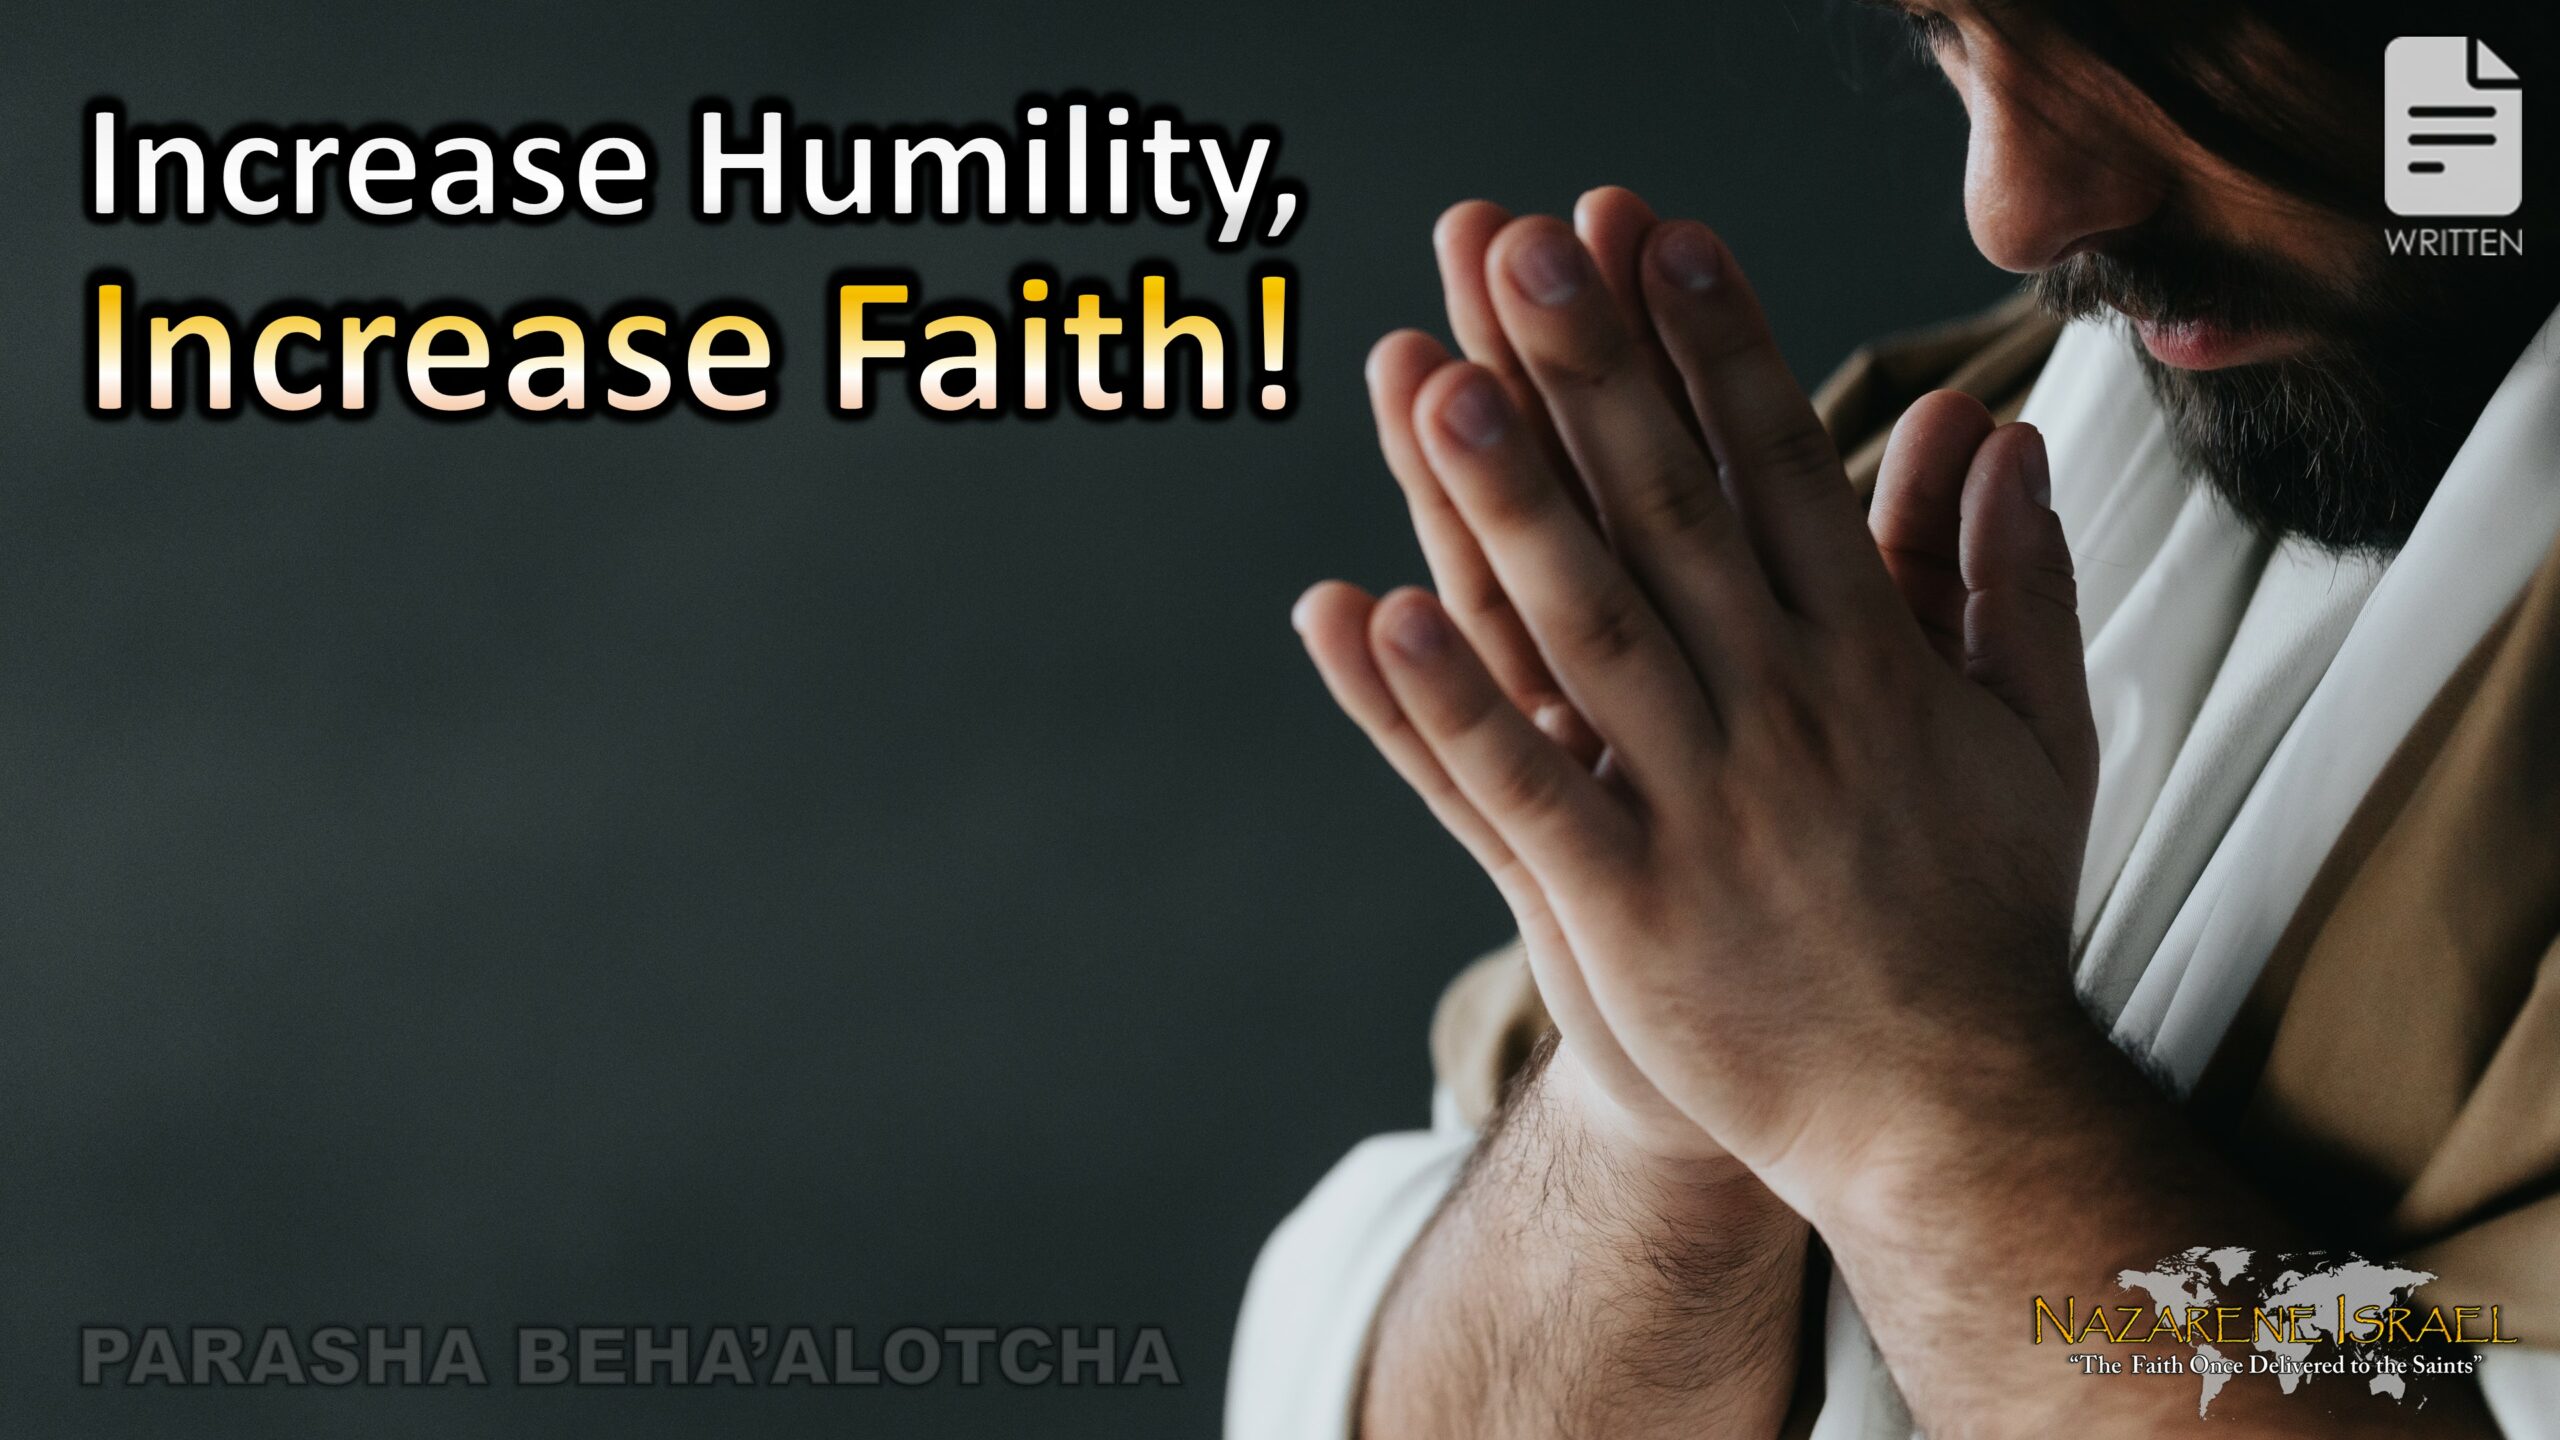 Parasha Beha’alotcha 2022: Increase Humility, Increase Faith!